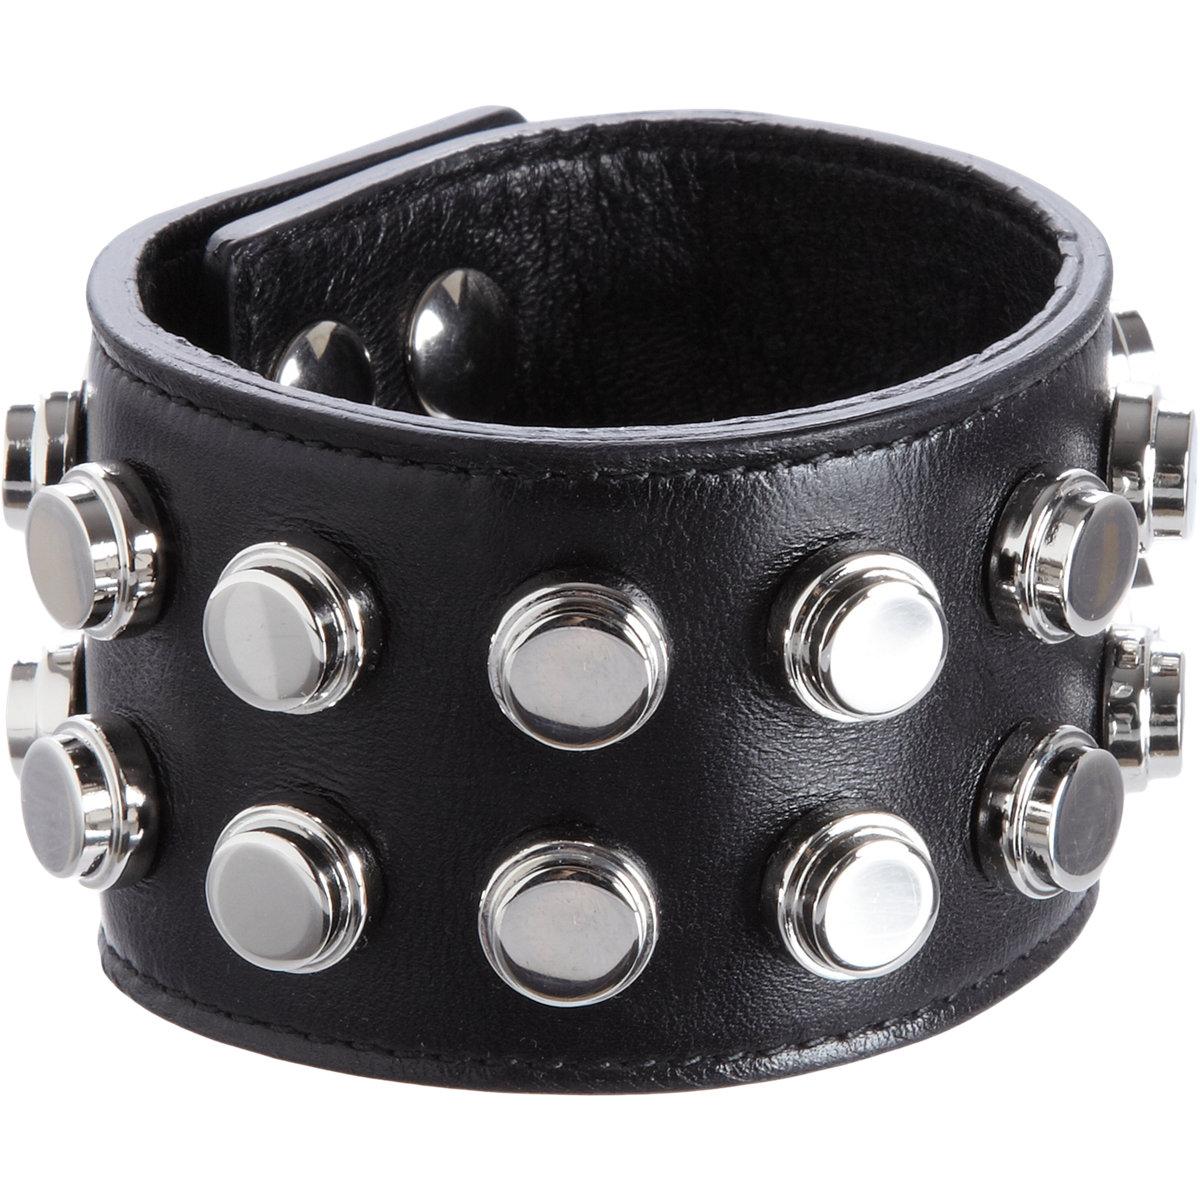 Saint Laurent Studded Leather Cuff Bracelet in Silver for Men | Lyst